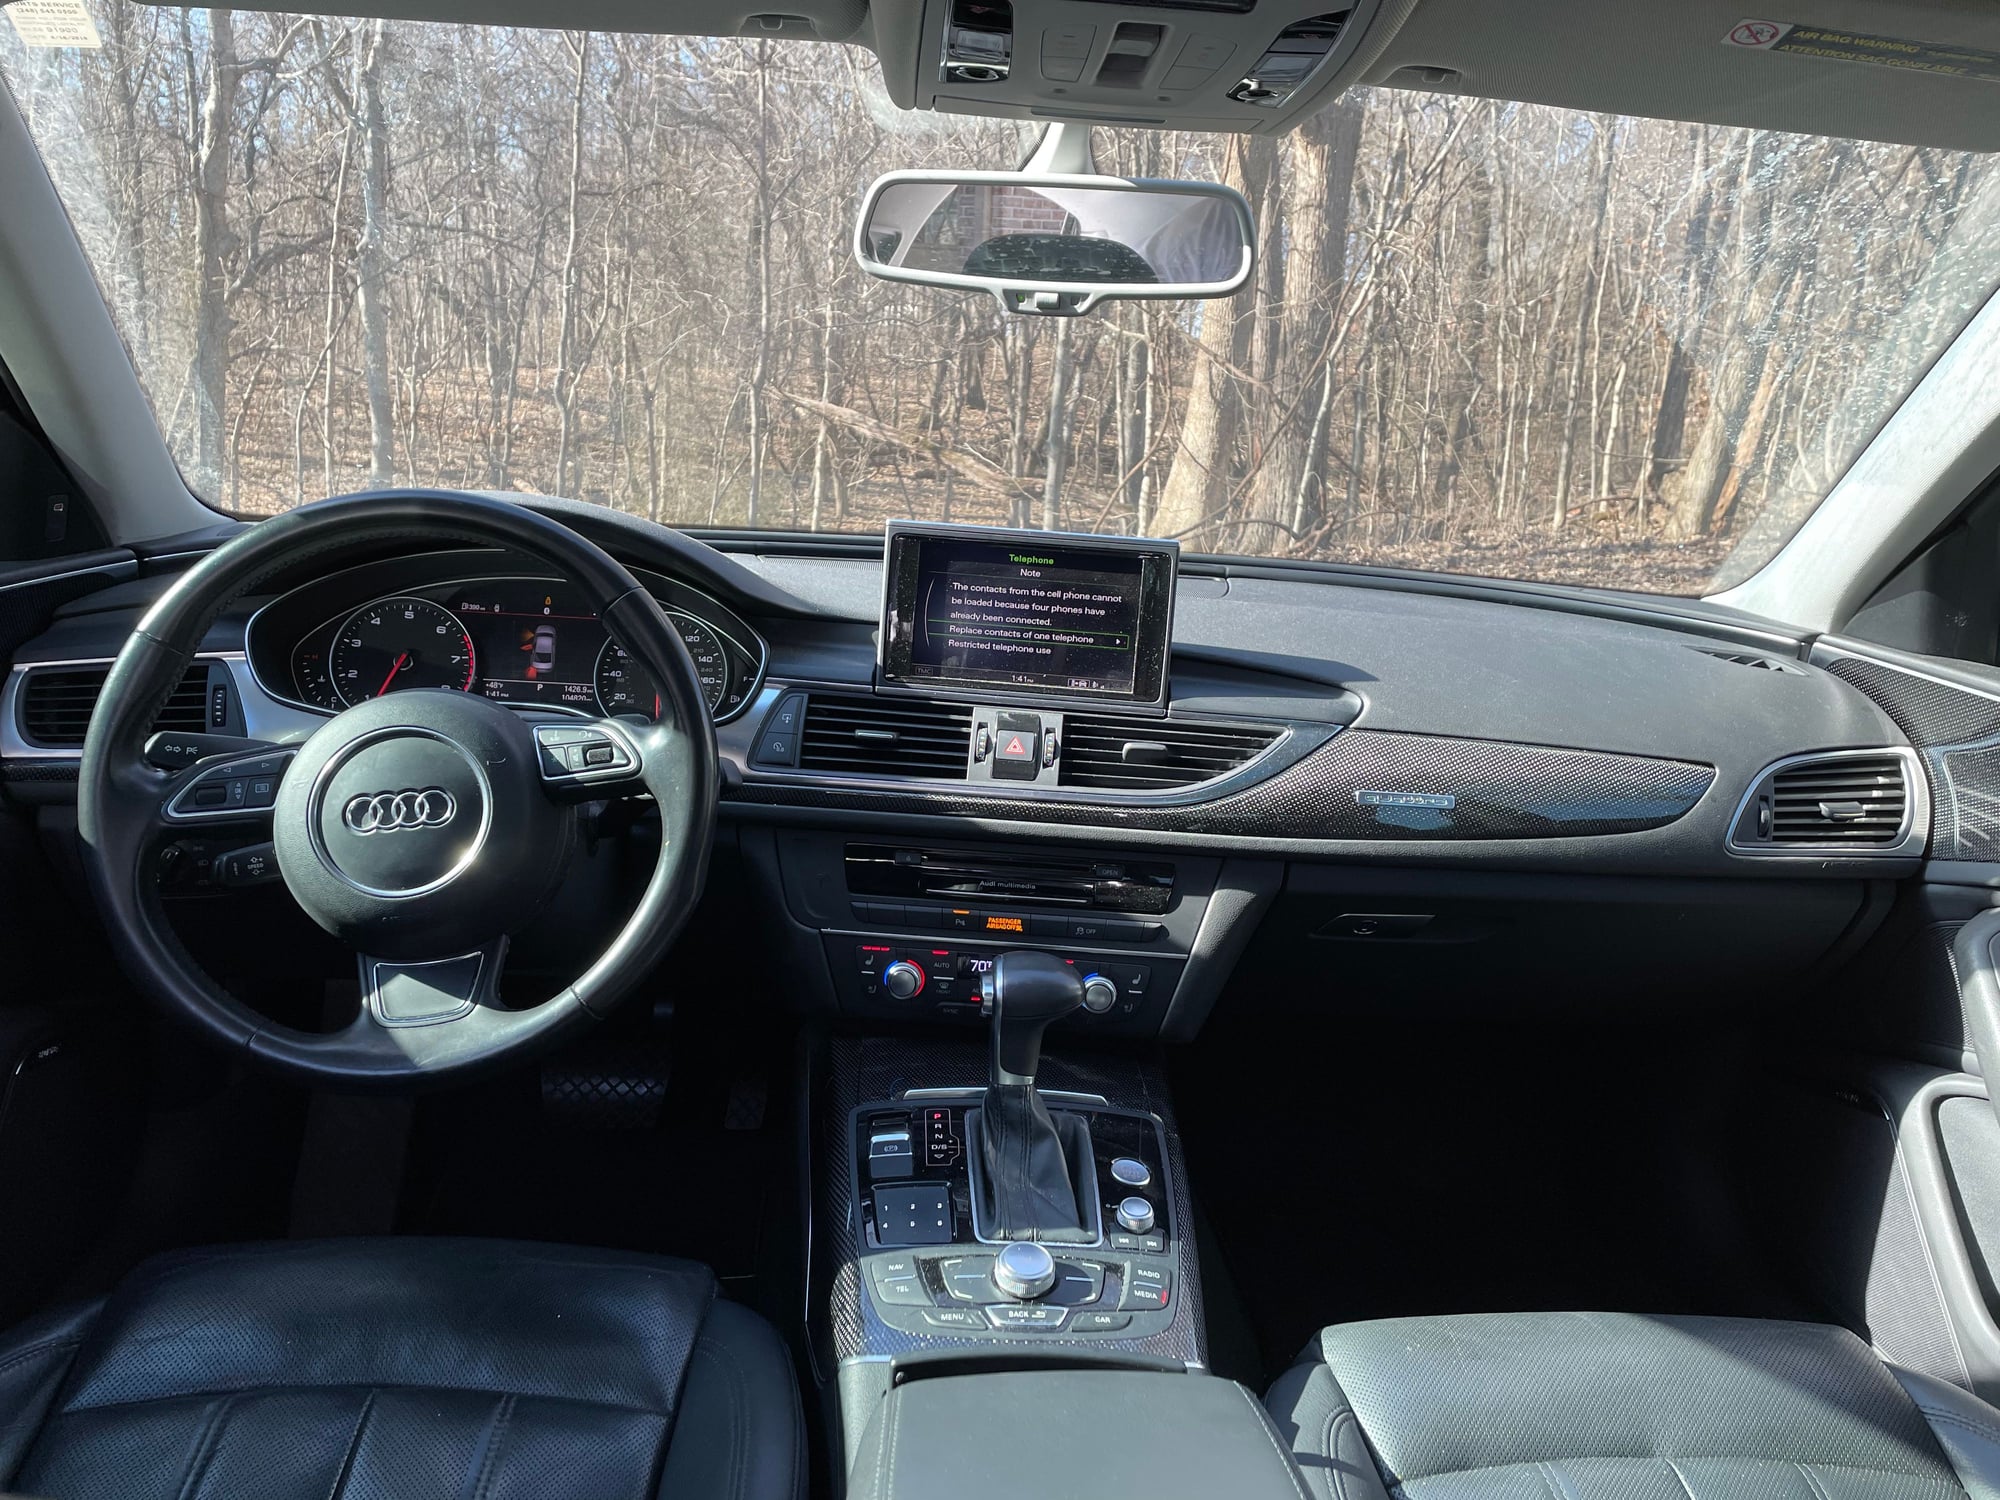 Interior/Upholstery - C7 S6 OEM Carbon Fiber Interior Trim Set - Used - 2012 to 2018 Audi A6 - 2012 to 2018 Audi A6 Quattro - 2012 to 2018 Audi S6 - Nashville, TN 37204, United States